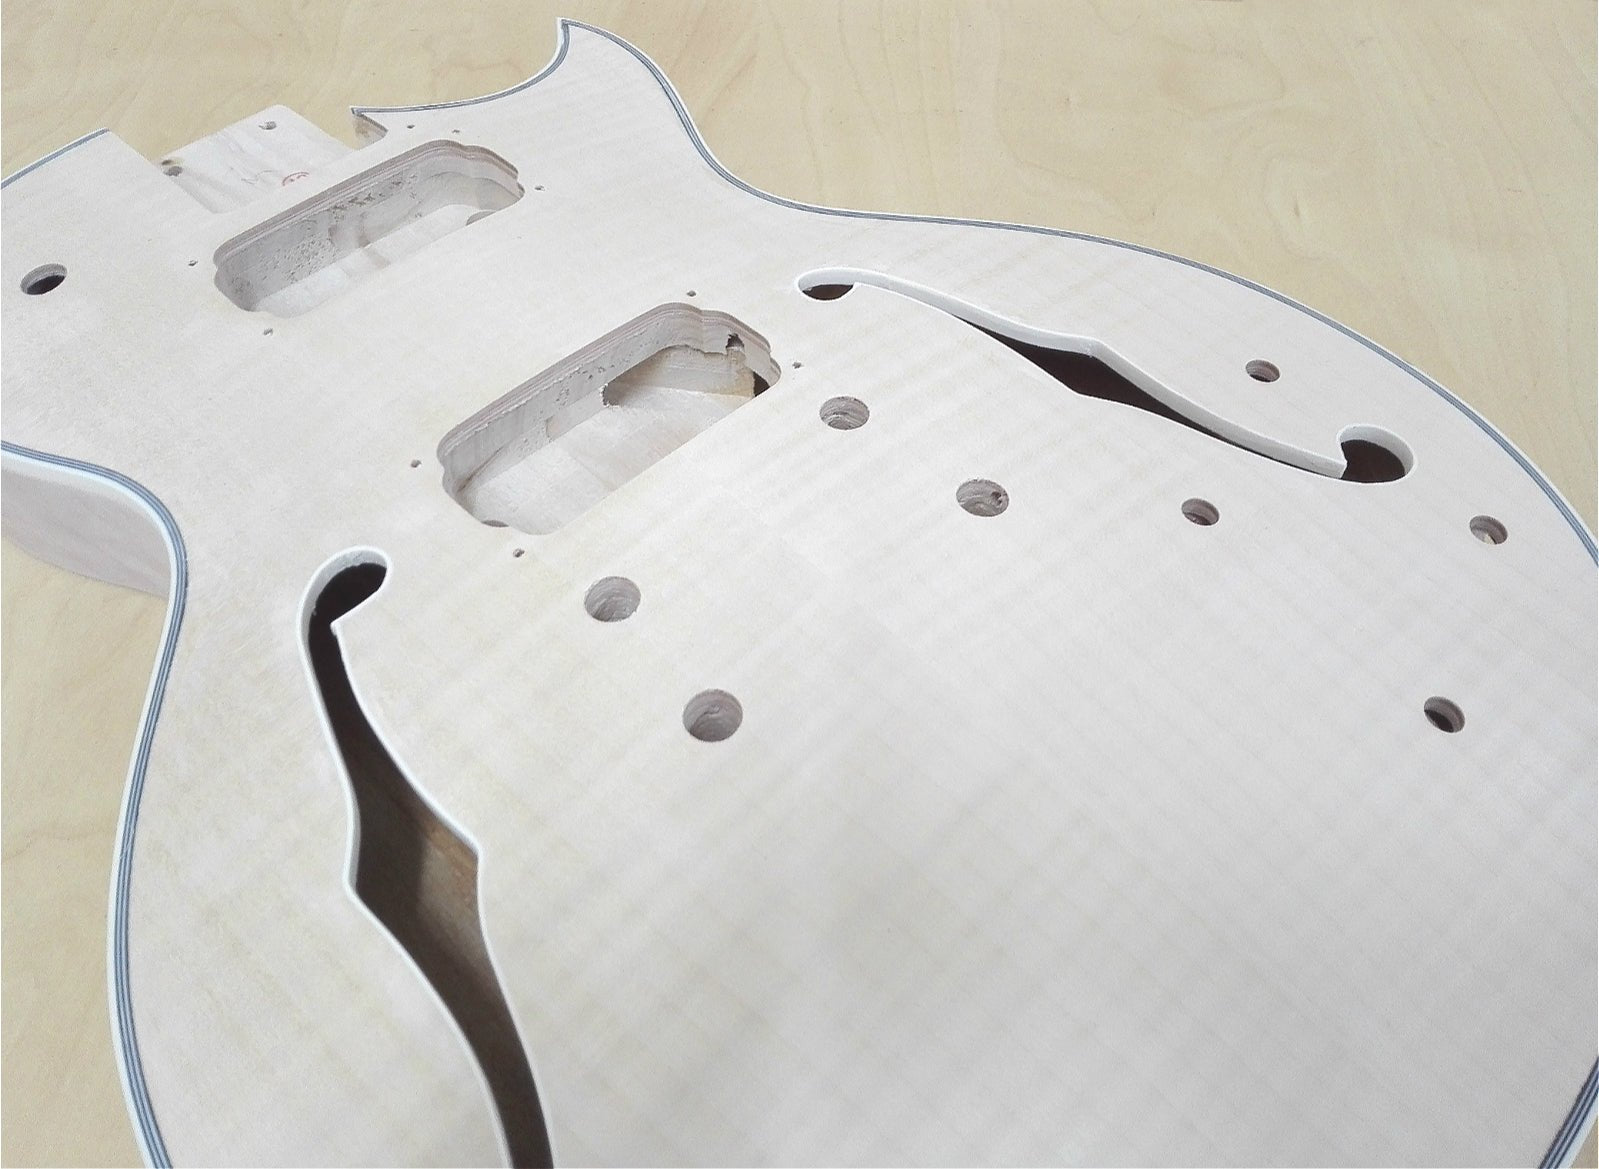 E239MBDIY Electric Guitar DIY Kit, Semi-Hollow Body, No-Soldering, Black Hardware